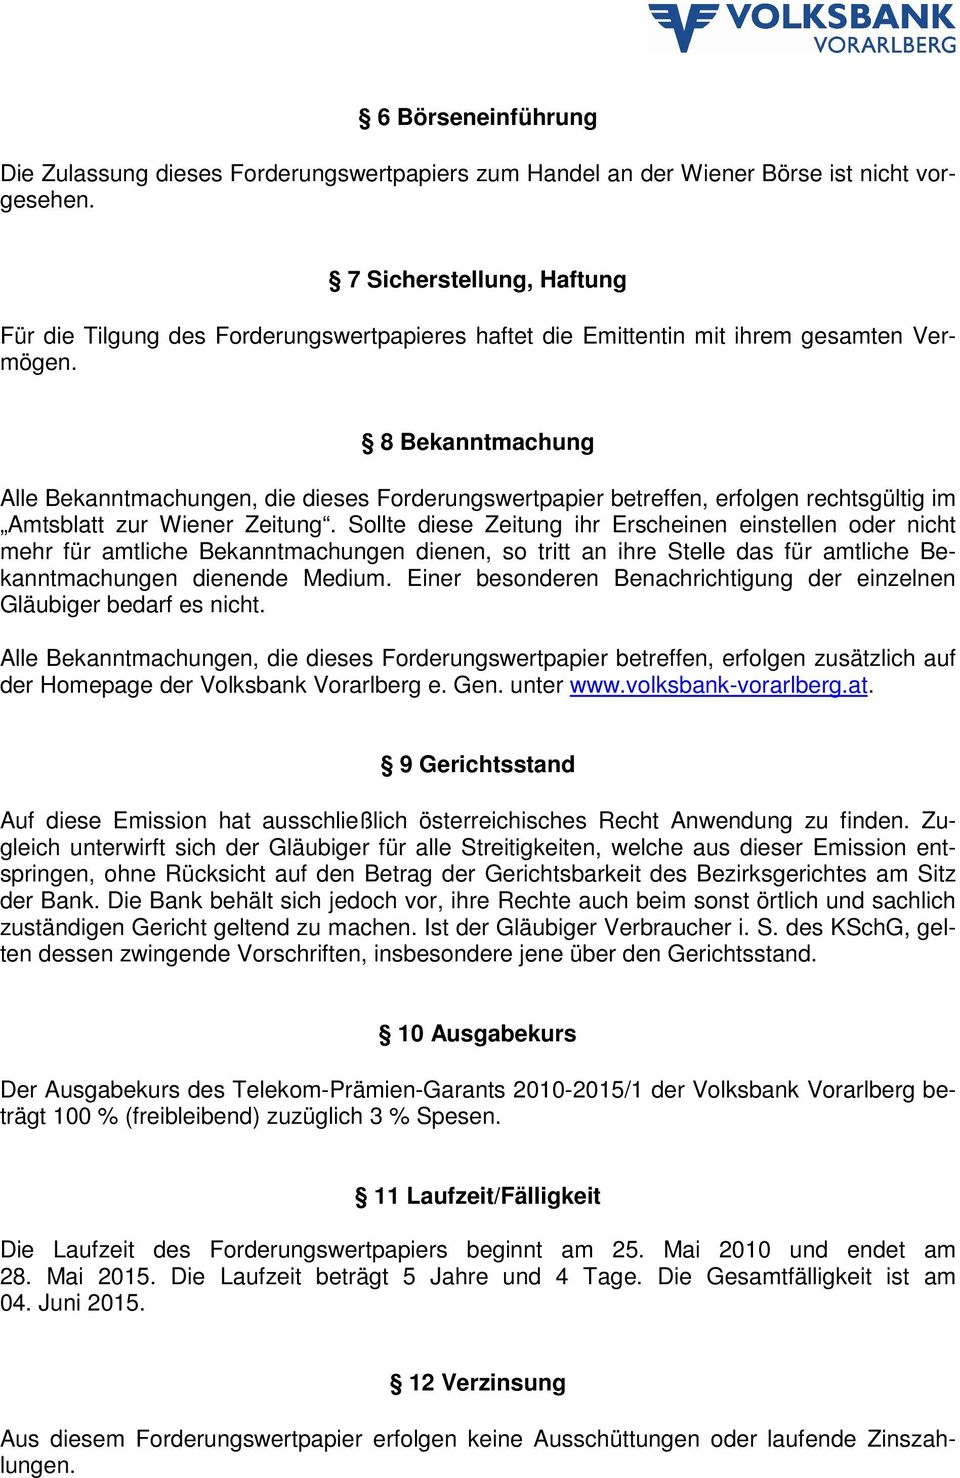 8 Bekanntmachung Alle Bekanntmachungen, de deses Forderungswertpaper betreffen, erfolgen rechtsgültg m Amtsblatt zur Wener Zetung.